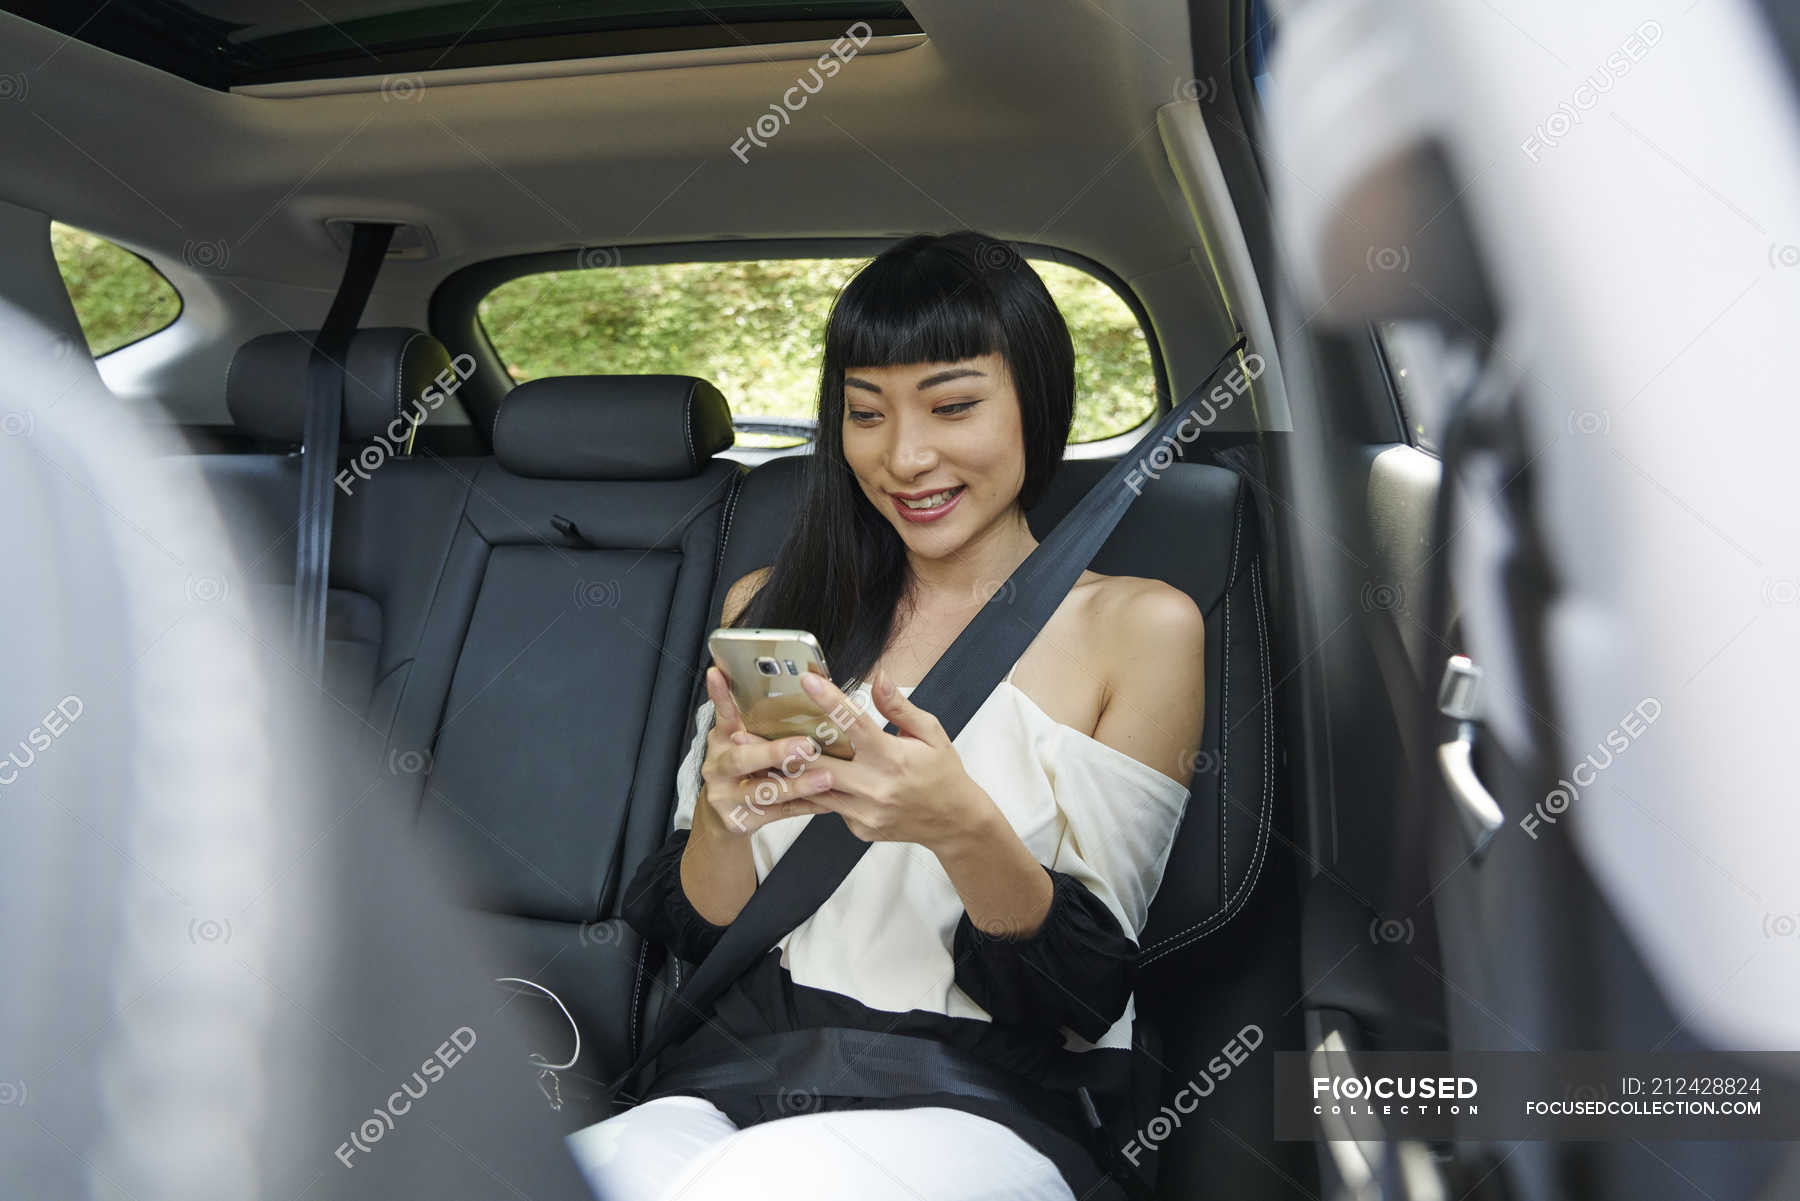 Back seat uber